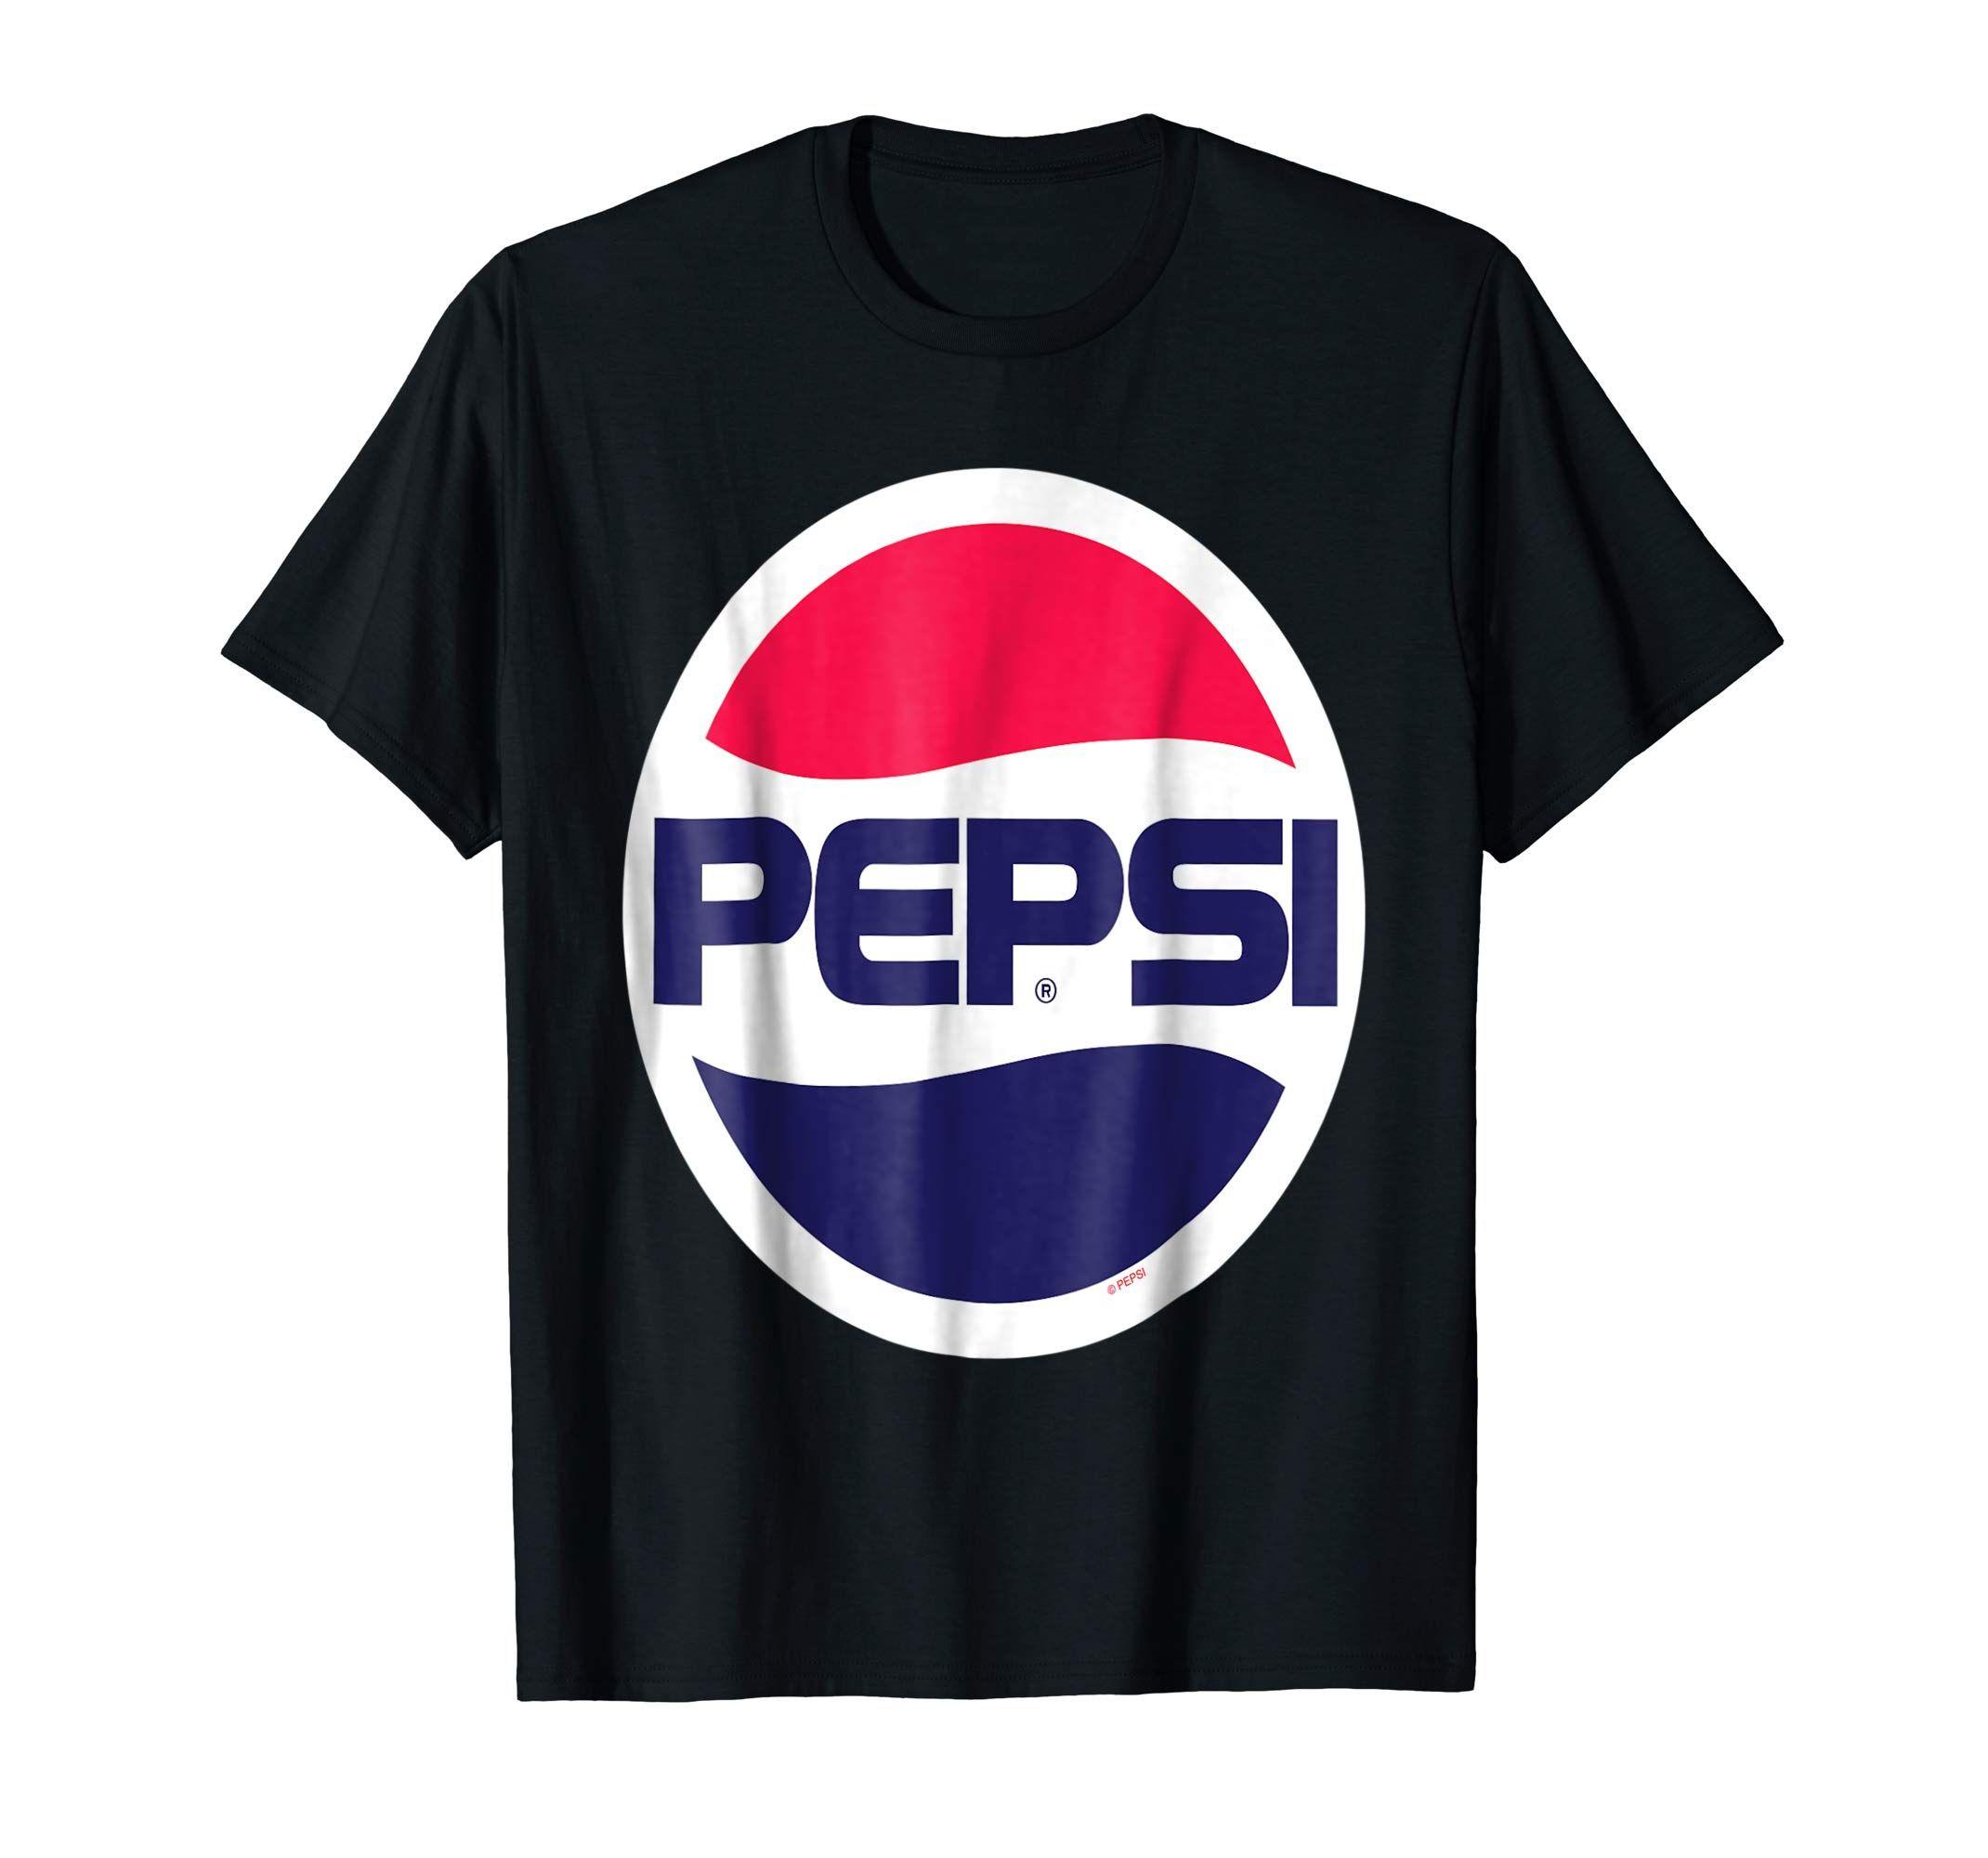 Vintage Diet Pepsi Logo - Amazon.com: Pepsi Cola Vintage Logo Brands Soft Drinks T Shirt: Clothing